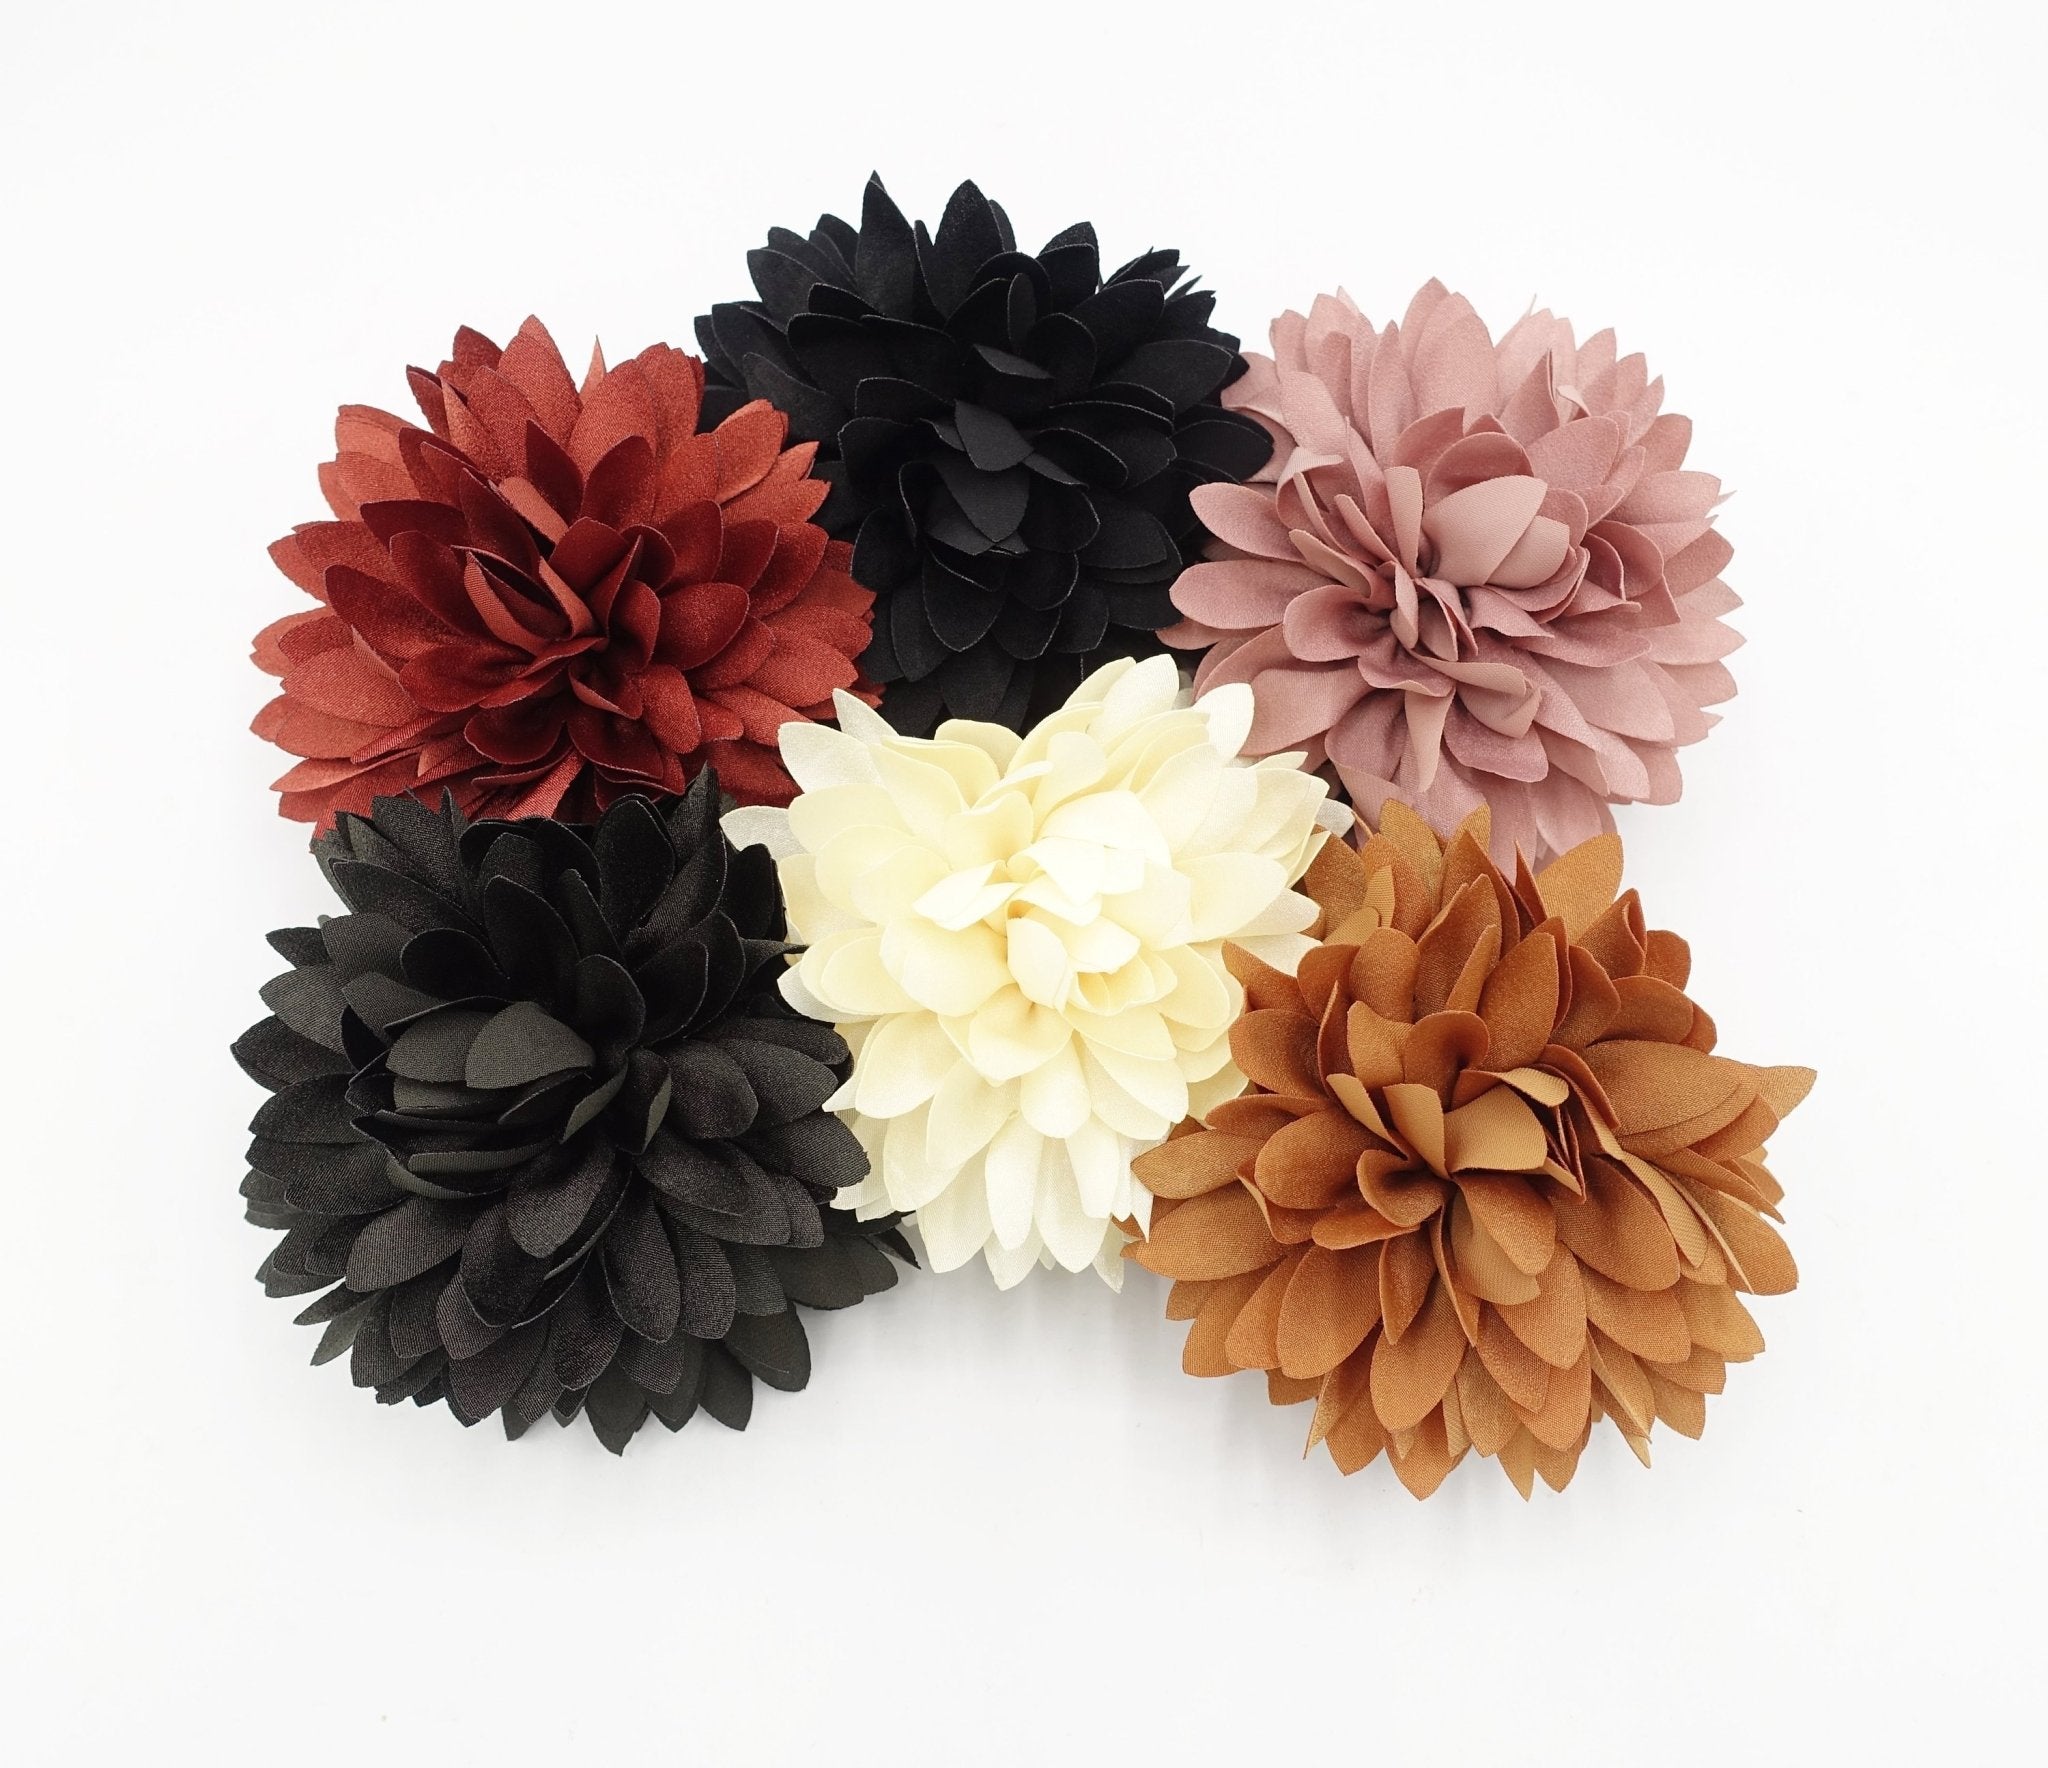 veryshine.com Barrettes & Clips big chrysanthemum flower hair claw clip  Women Hair Accessory